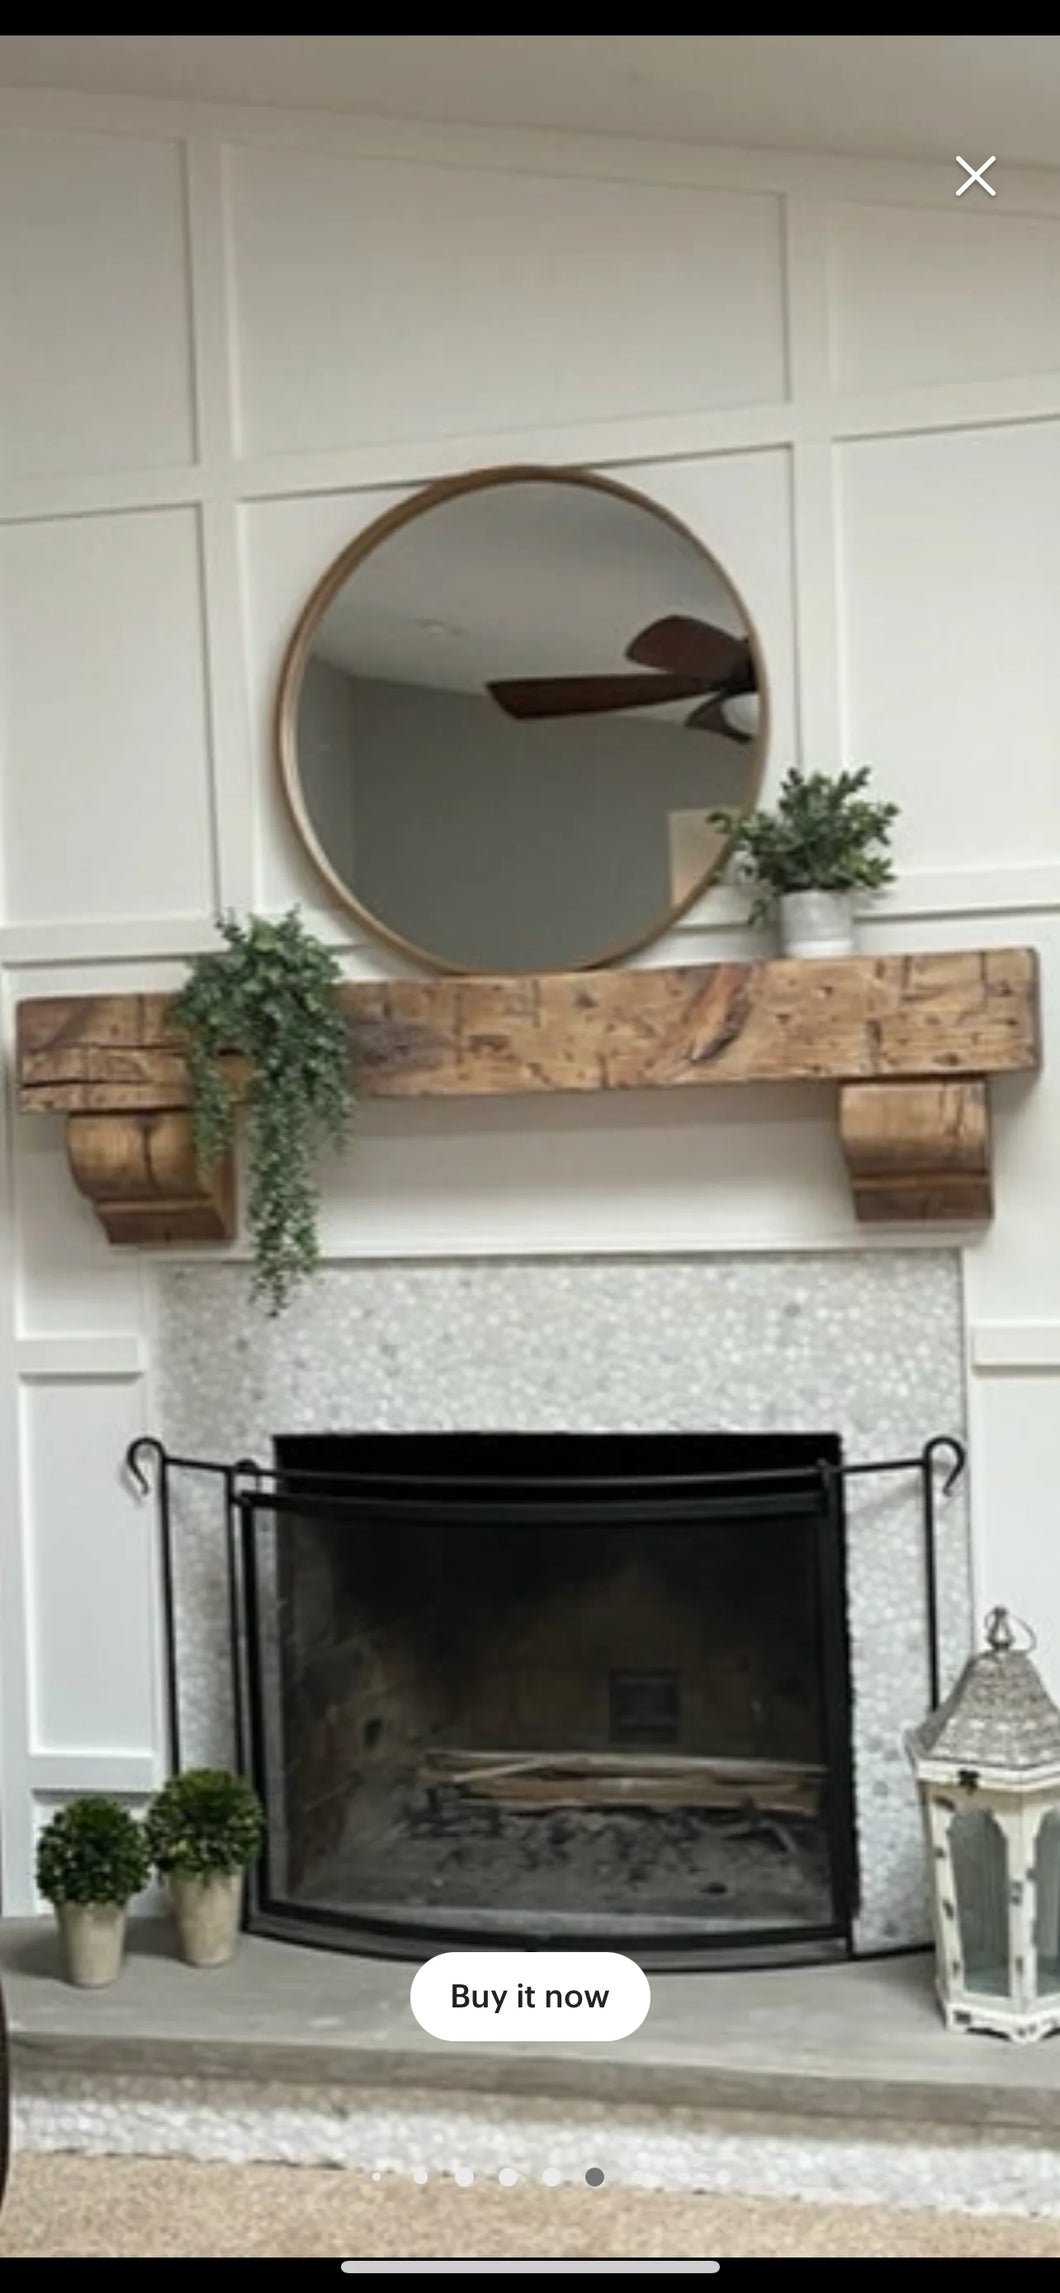 Briana's new fireplace mantel